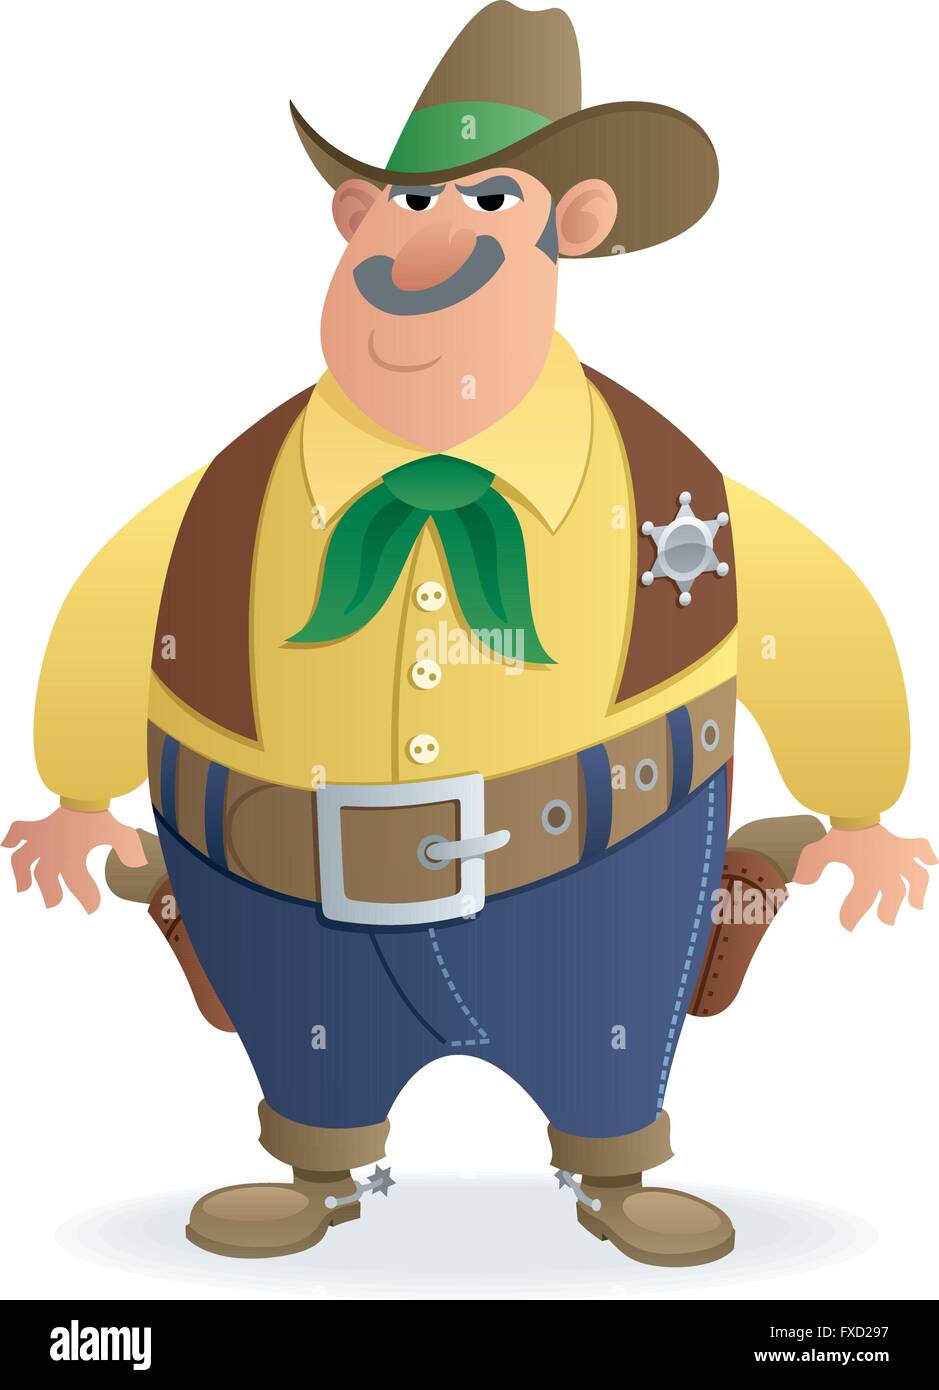 Cartoon illustration of a sheriff. Stock Vector